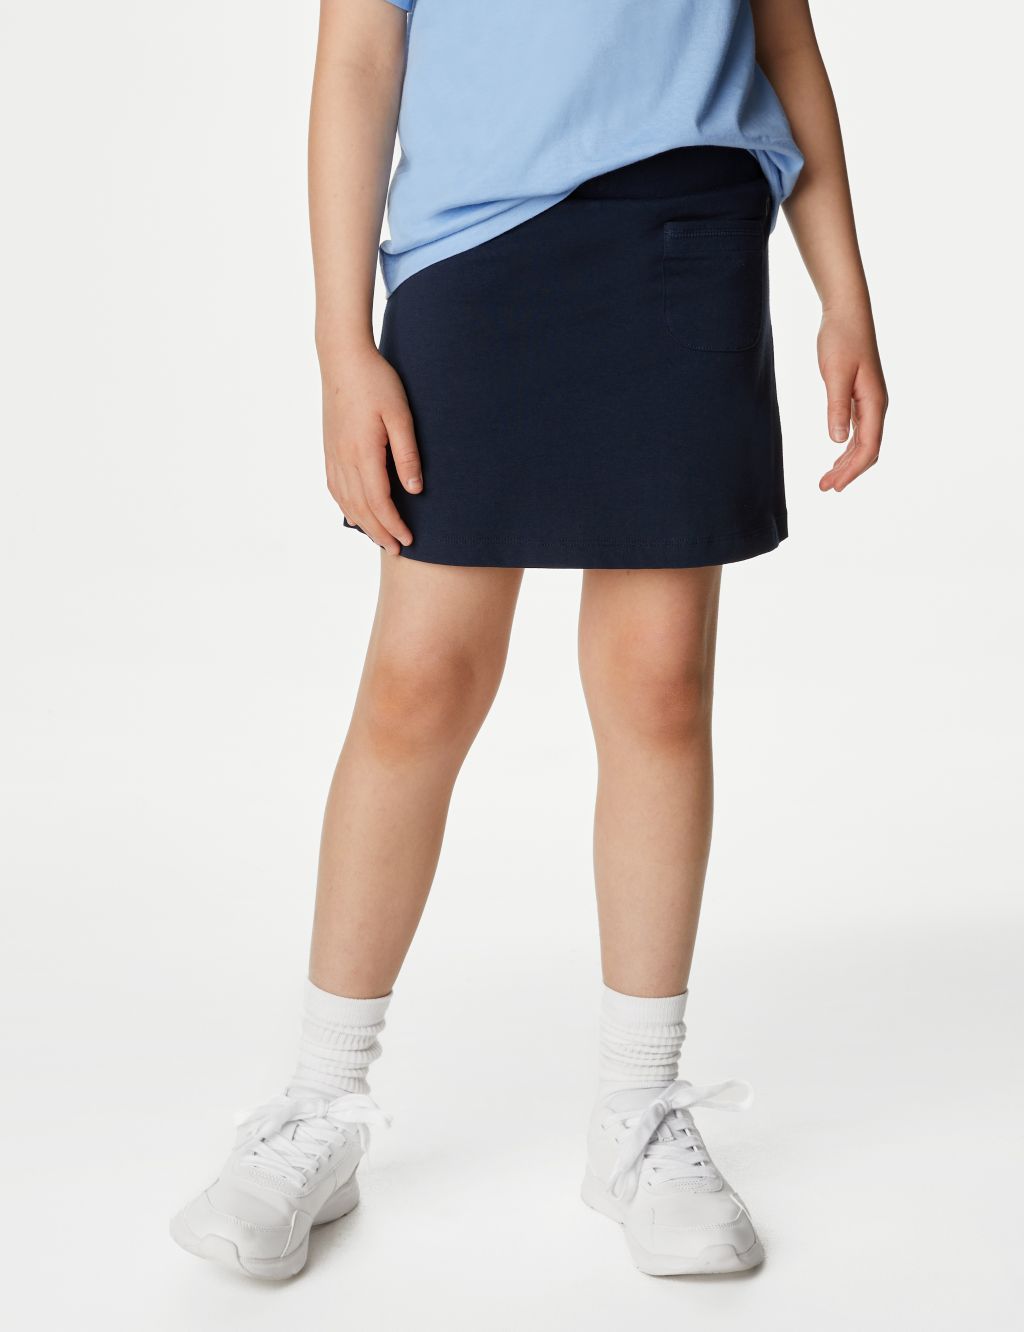 Girls' Cotton with Stretch Sports School Skorts (2-16 Yrs) image 2